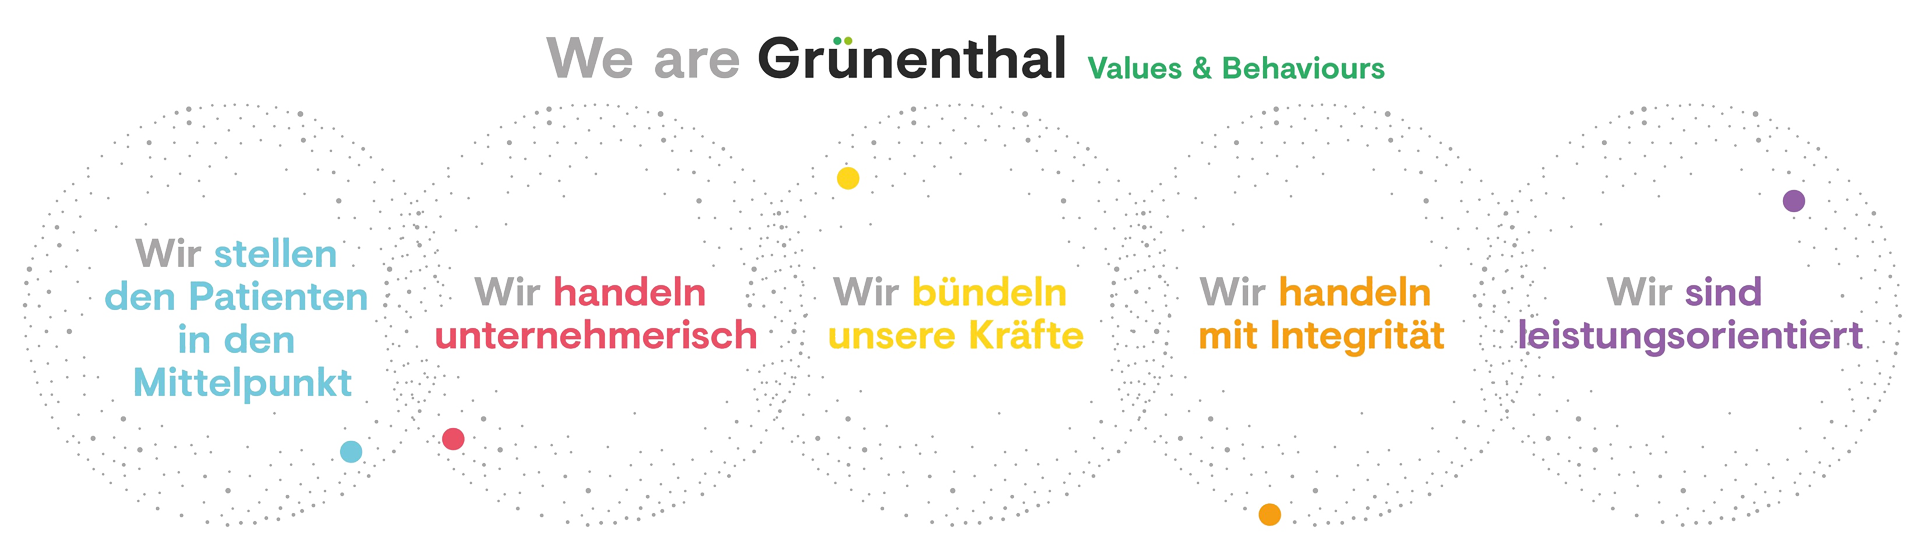 We are Grünenthal  Values & Behaviours